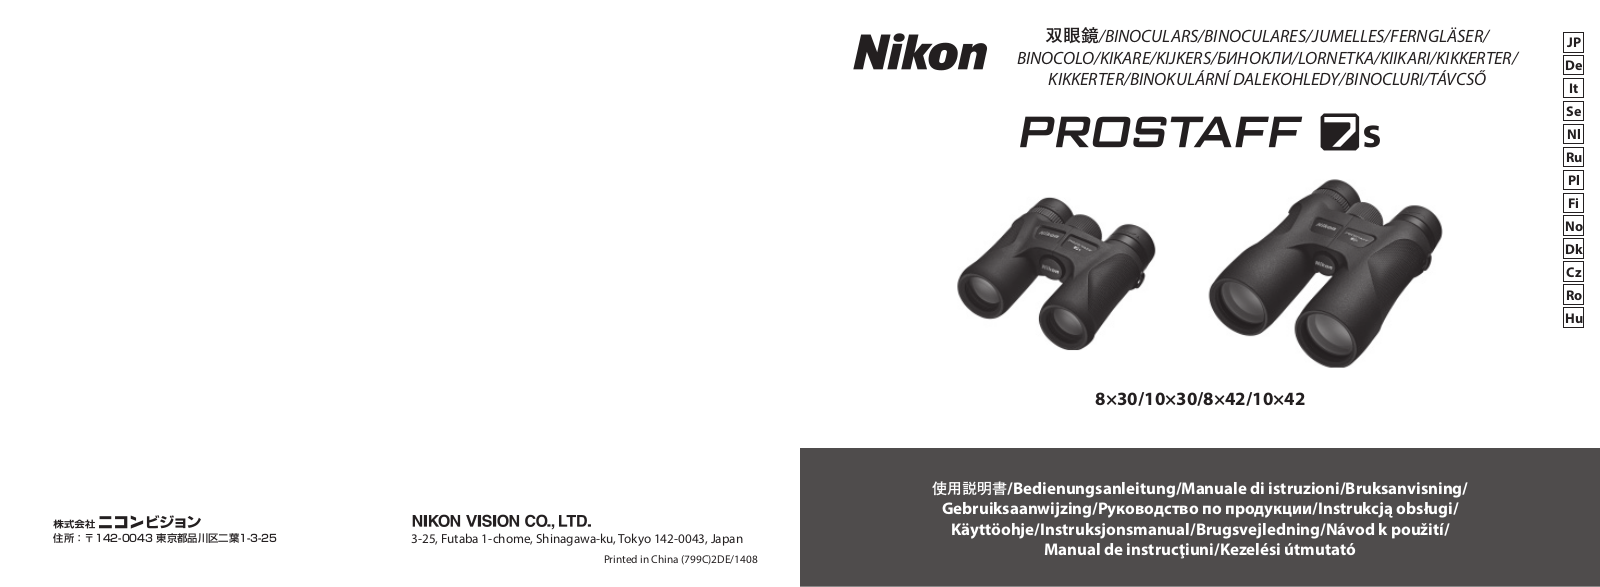 Nikon Prostaff 7S 8x42 User manual